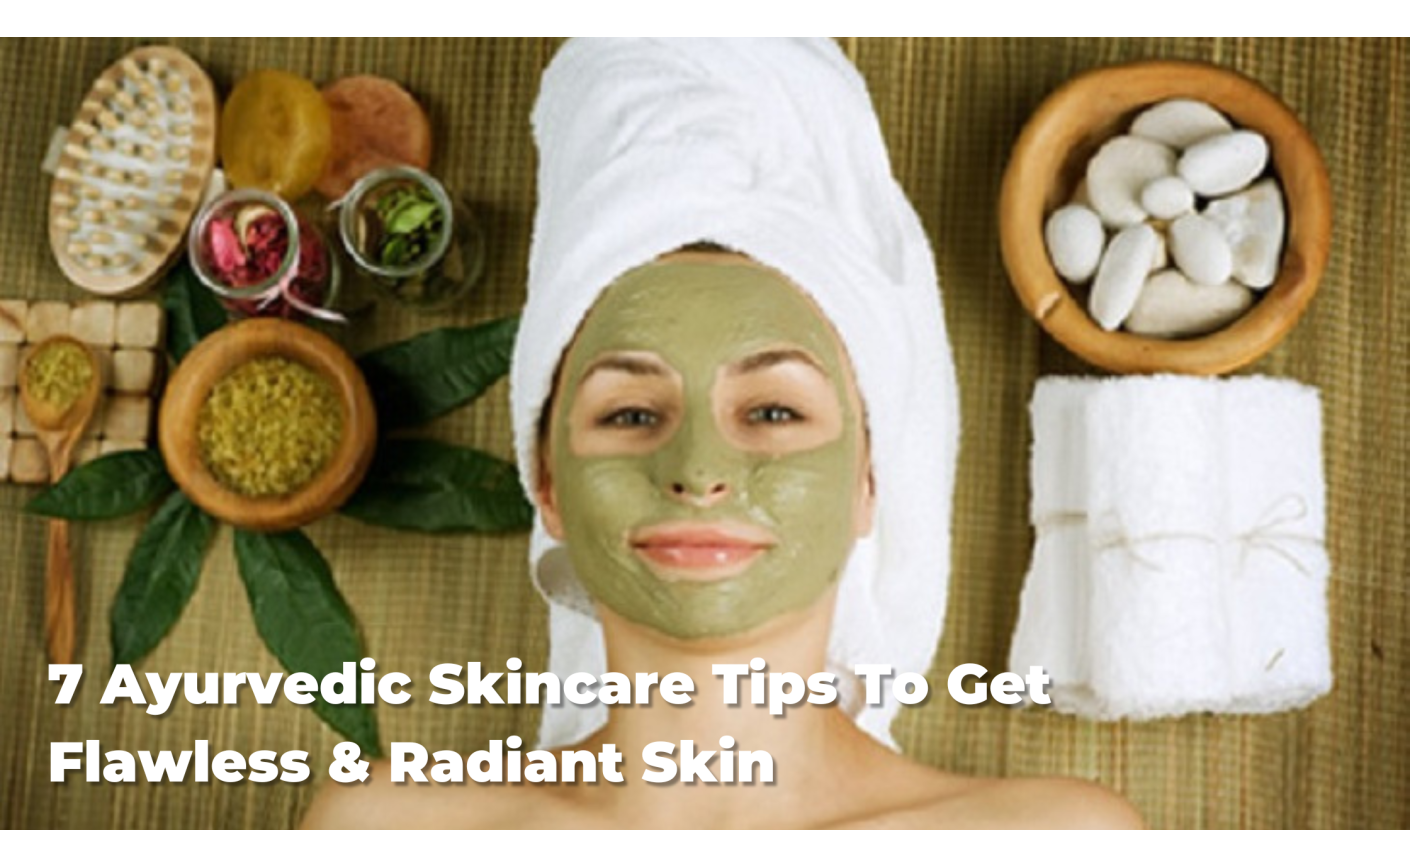 5 Ayurvedic Skincare Tips To Get Flawless & Radiant Skin